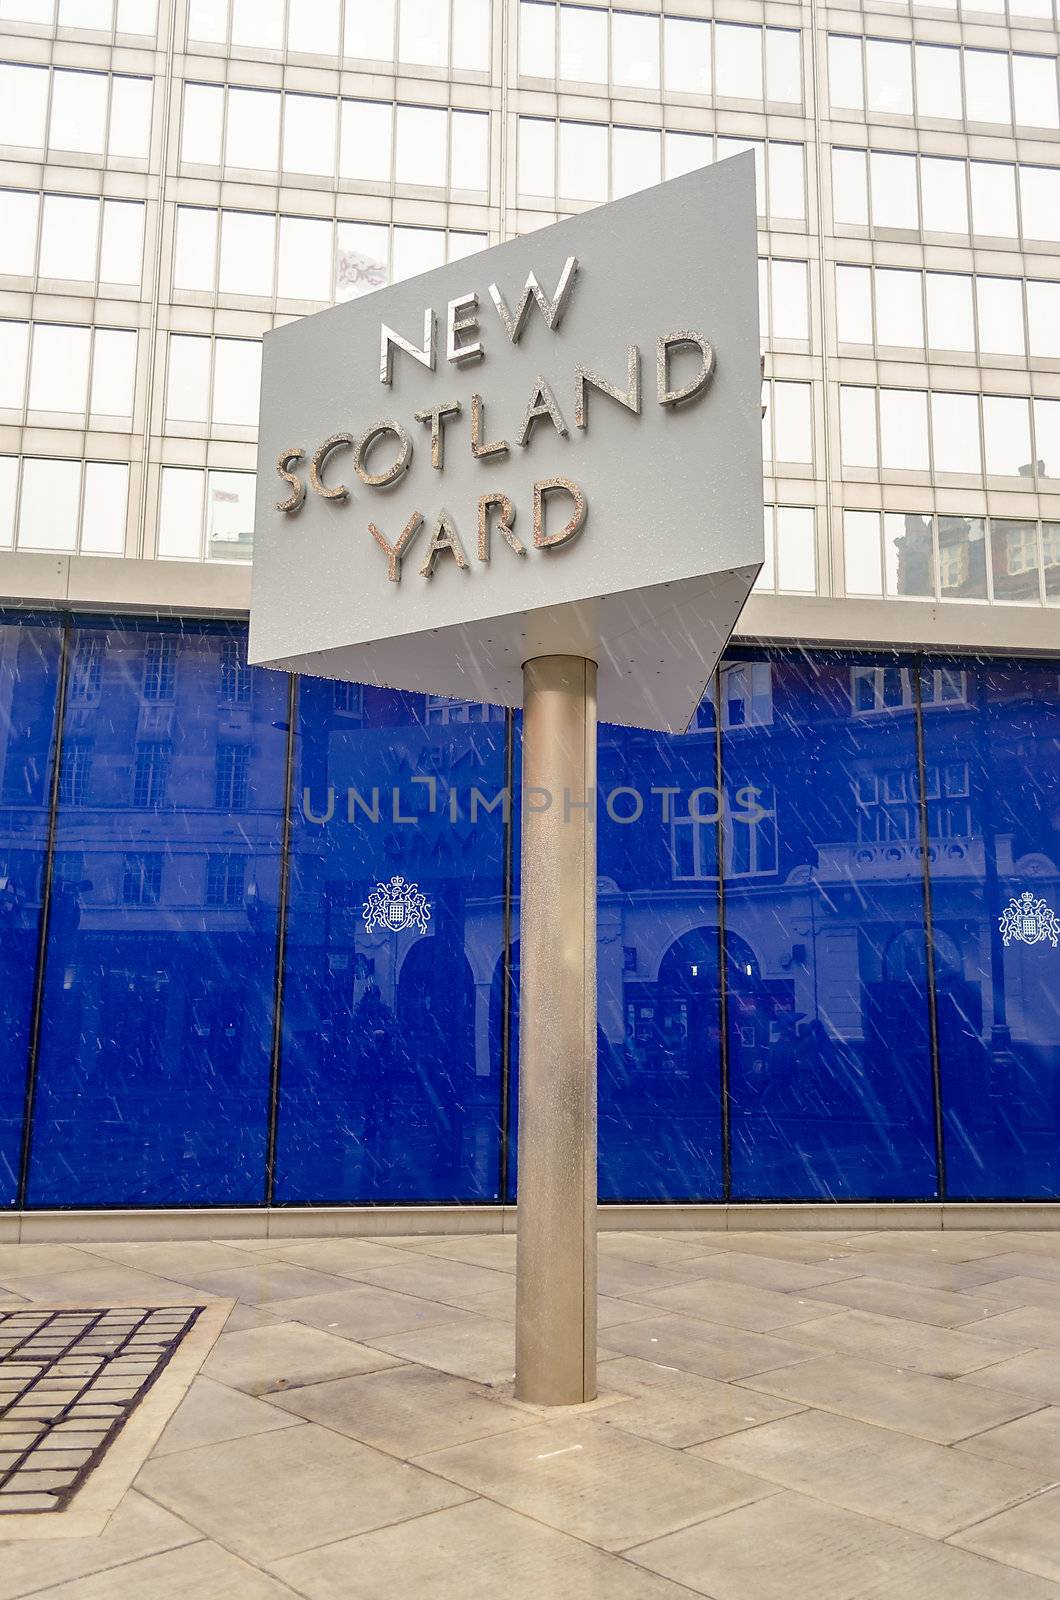 New Scotland Yard Building, London, UK